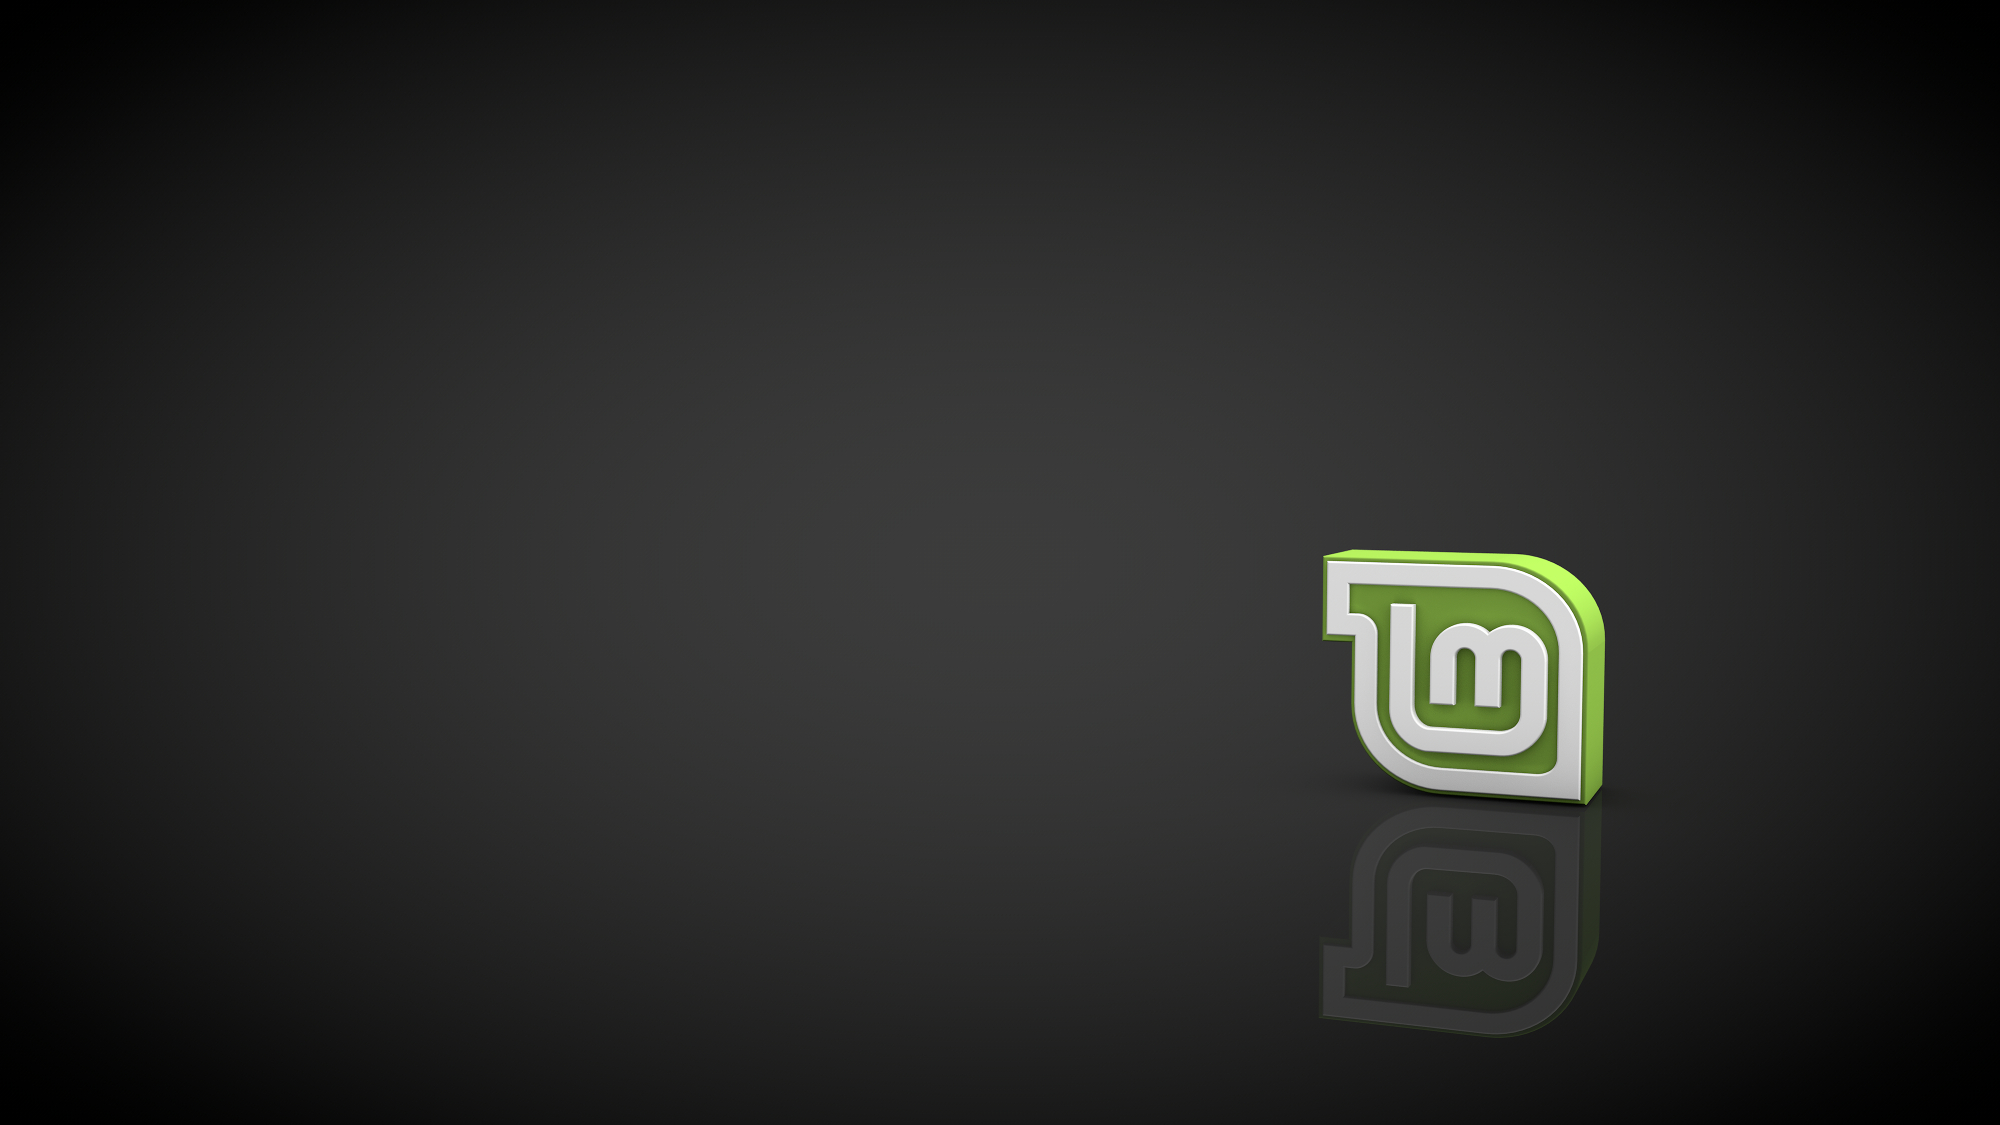 Linux Mint Facebook Cover - HD Wallpaper 